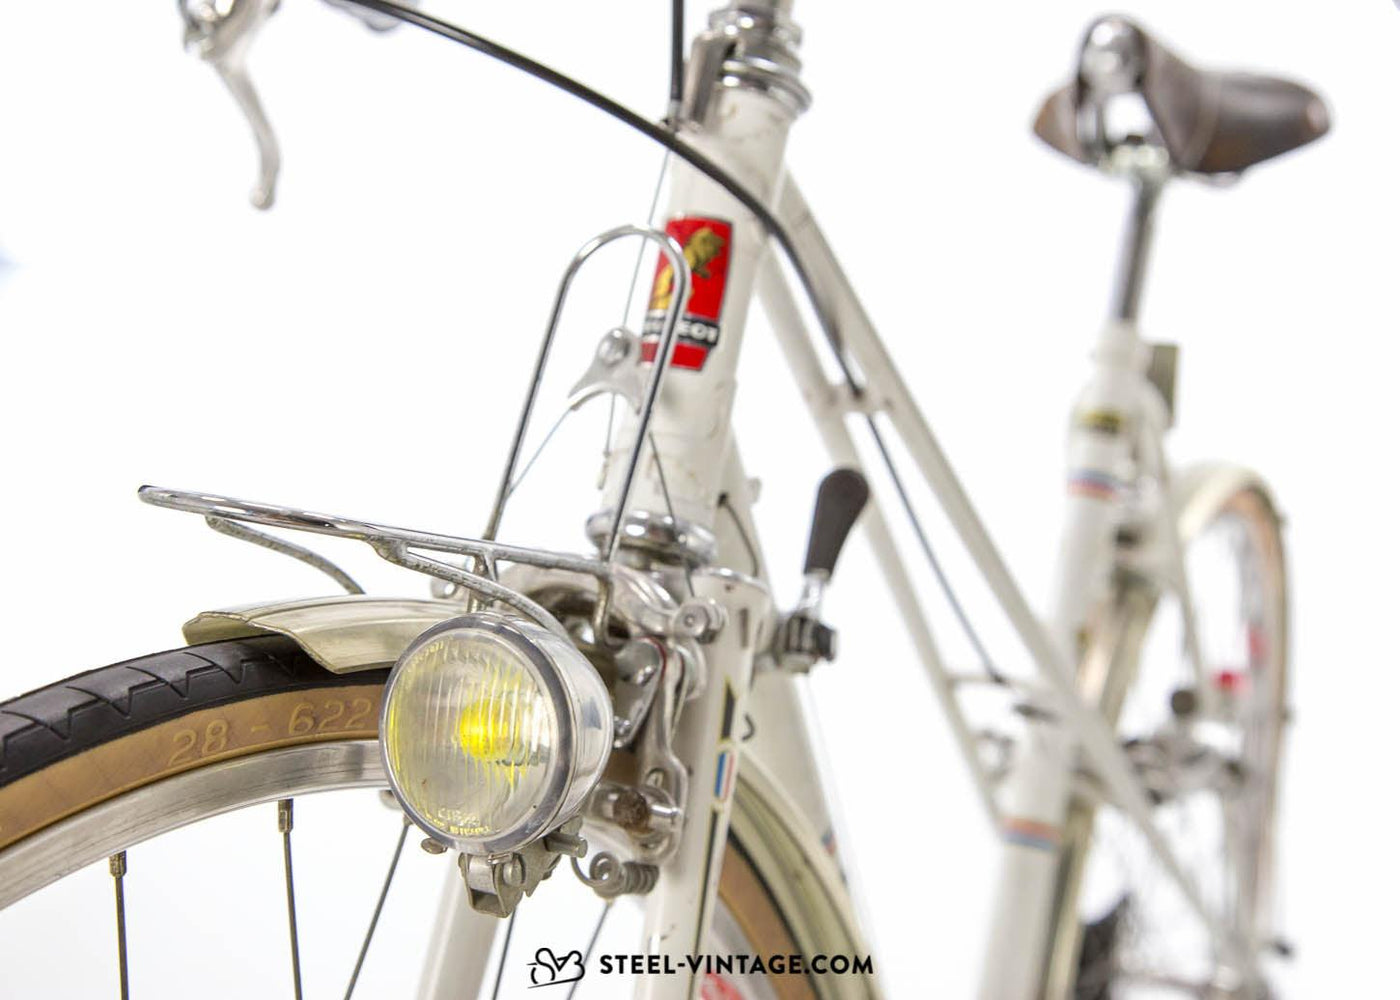 Peugeot PH 18 M White Vintage Ladies Bike - Steel Vintage Bikes